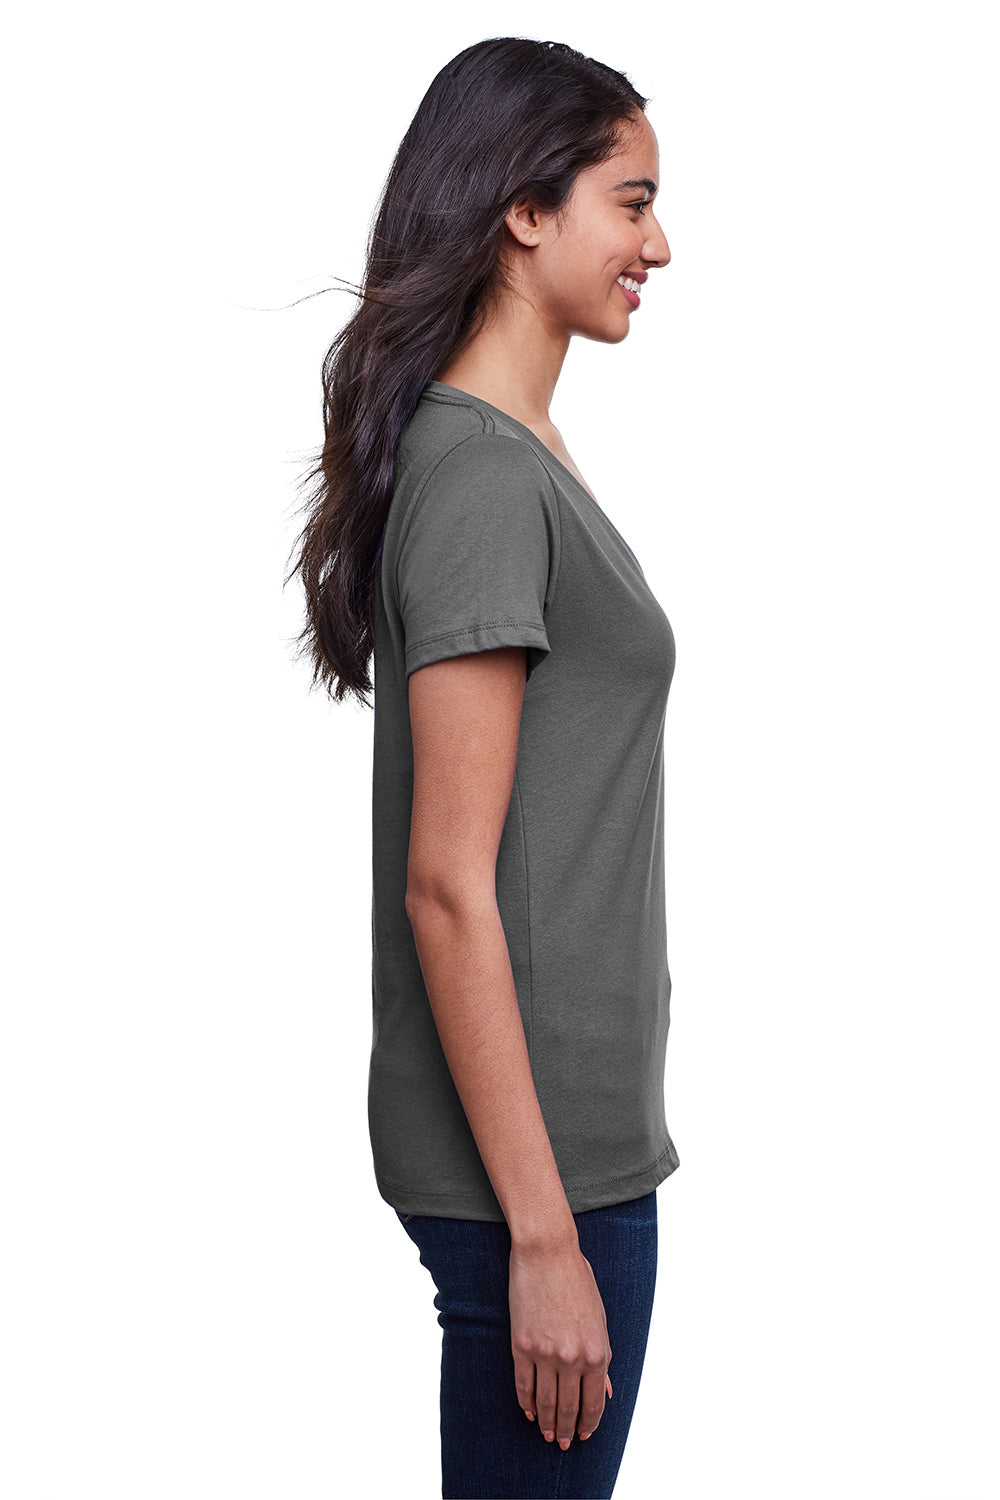 Next Level N4240 Womens Eco Performance Moisture Wicking Short Sleeve V-Neck T-Shirt Heavy Metal Grey Side